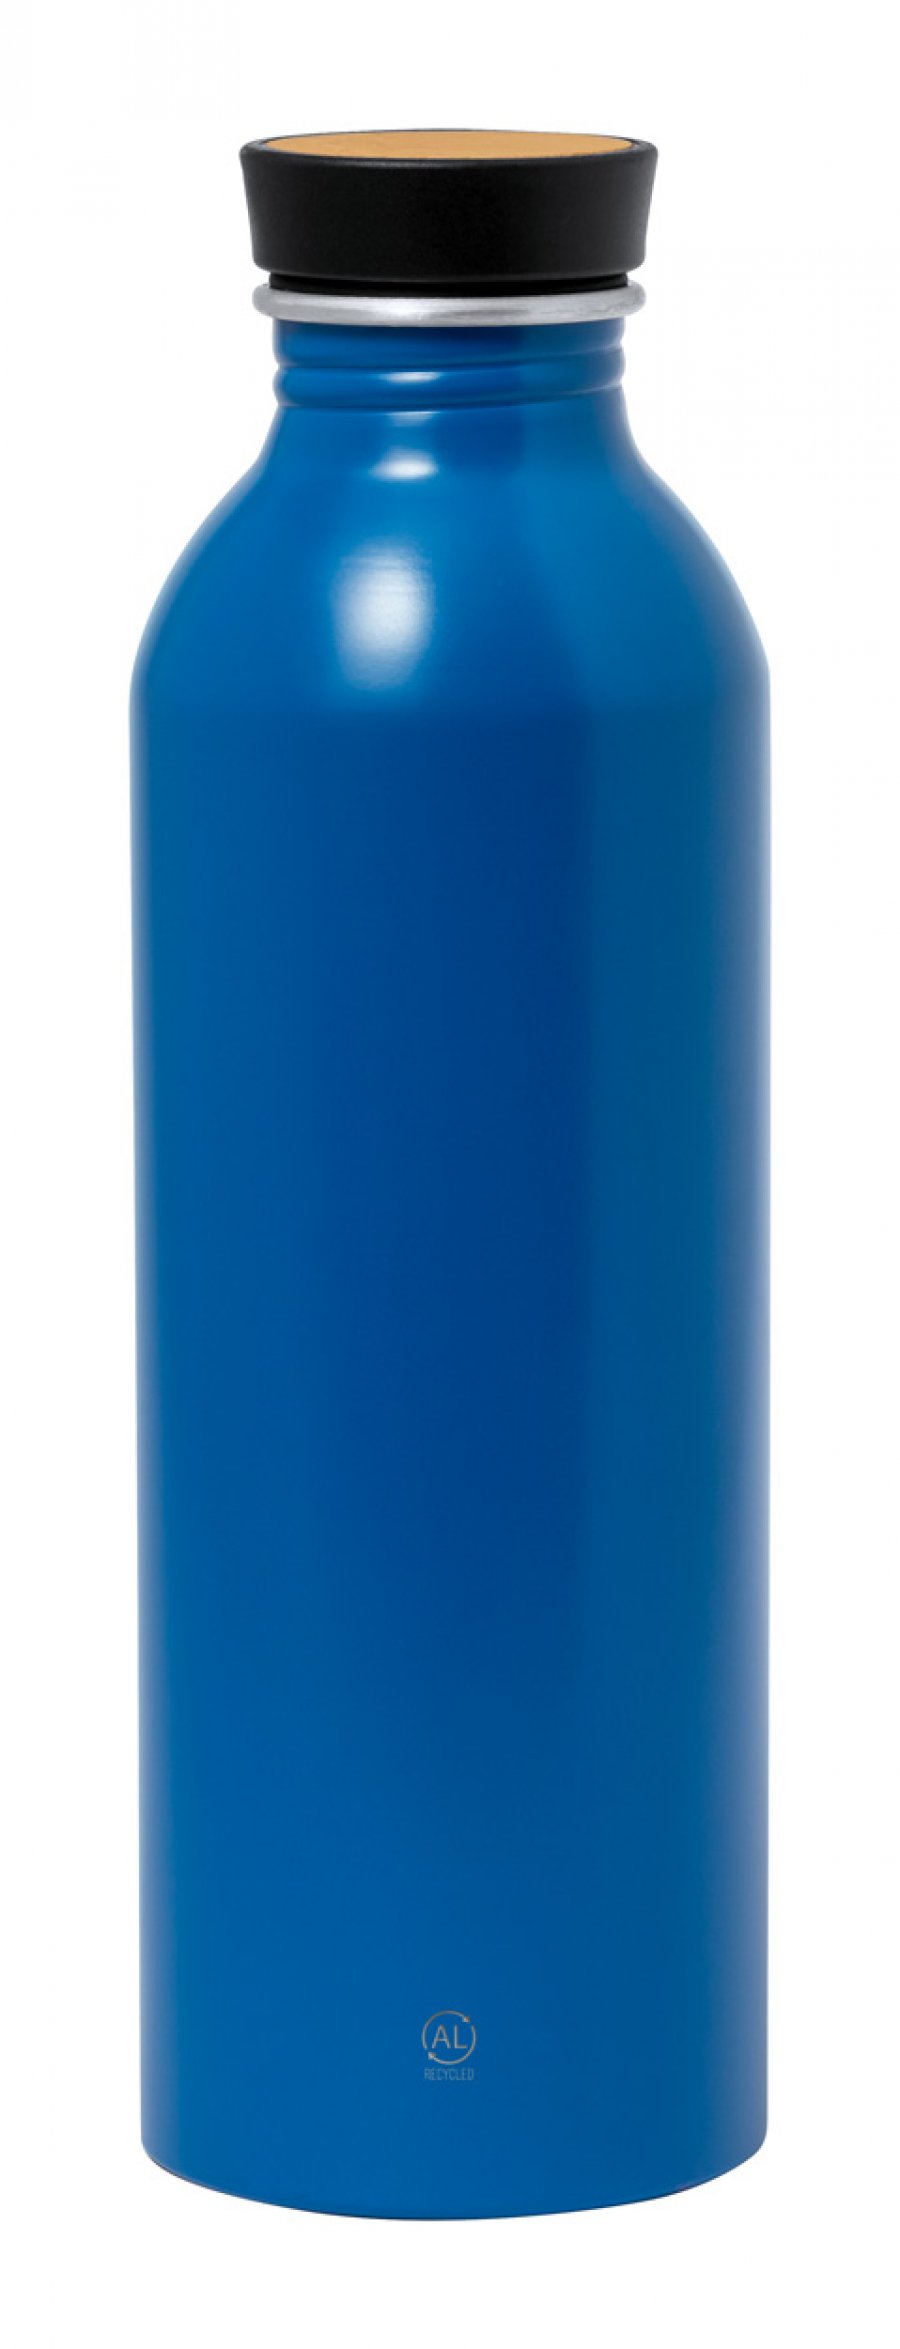 "Claud" recyklovaná hliníková láhev, modrá